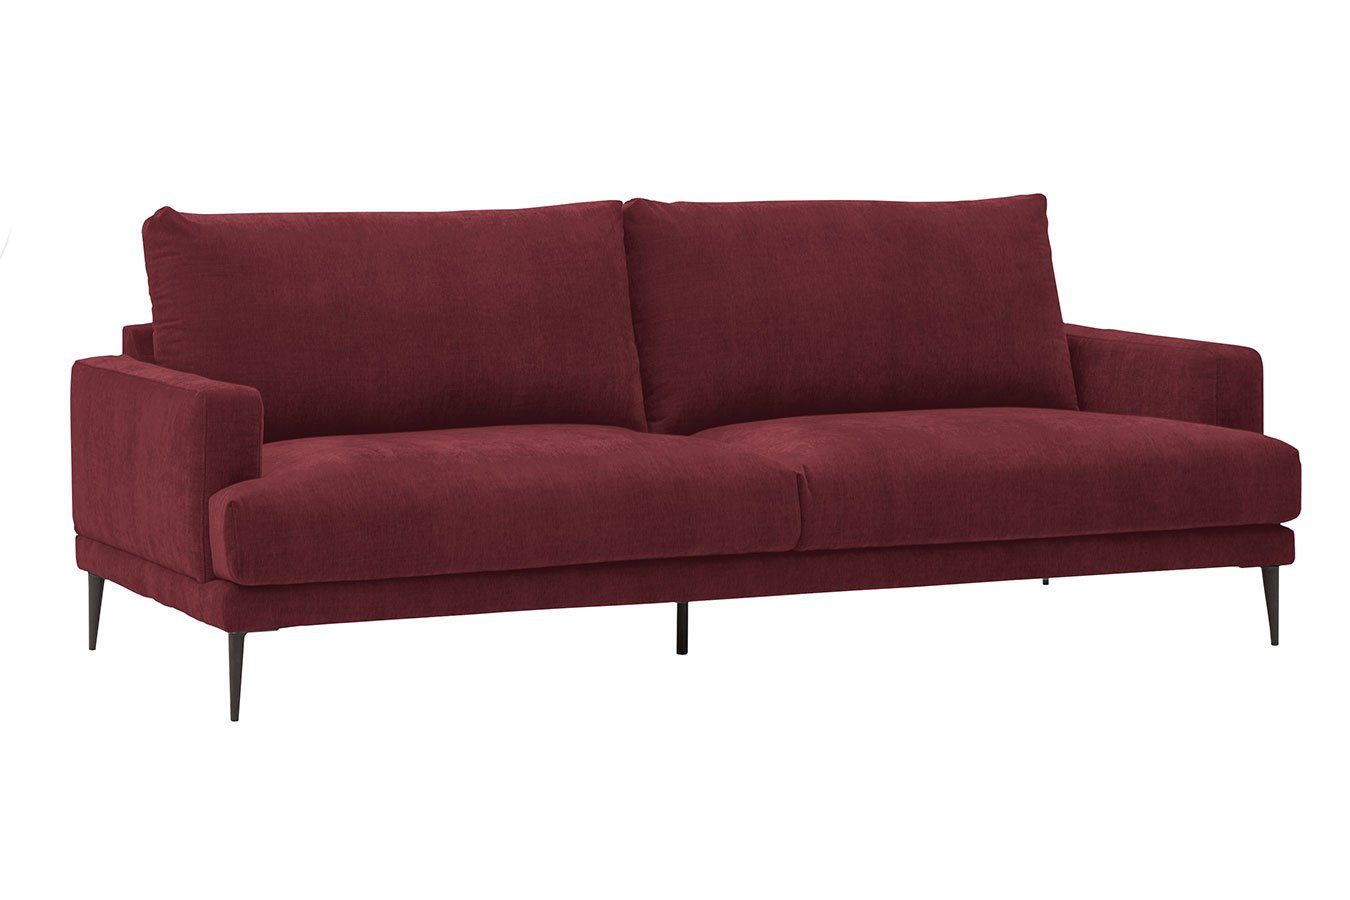 3-Sitzer rot daslagerhaus Big-Sofa living Duck Stoff XL